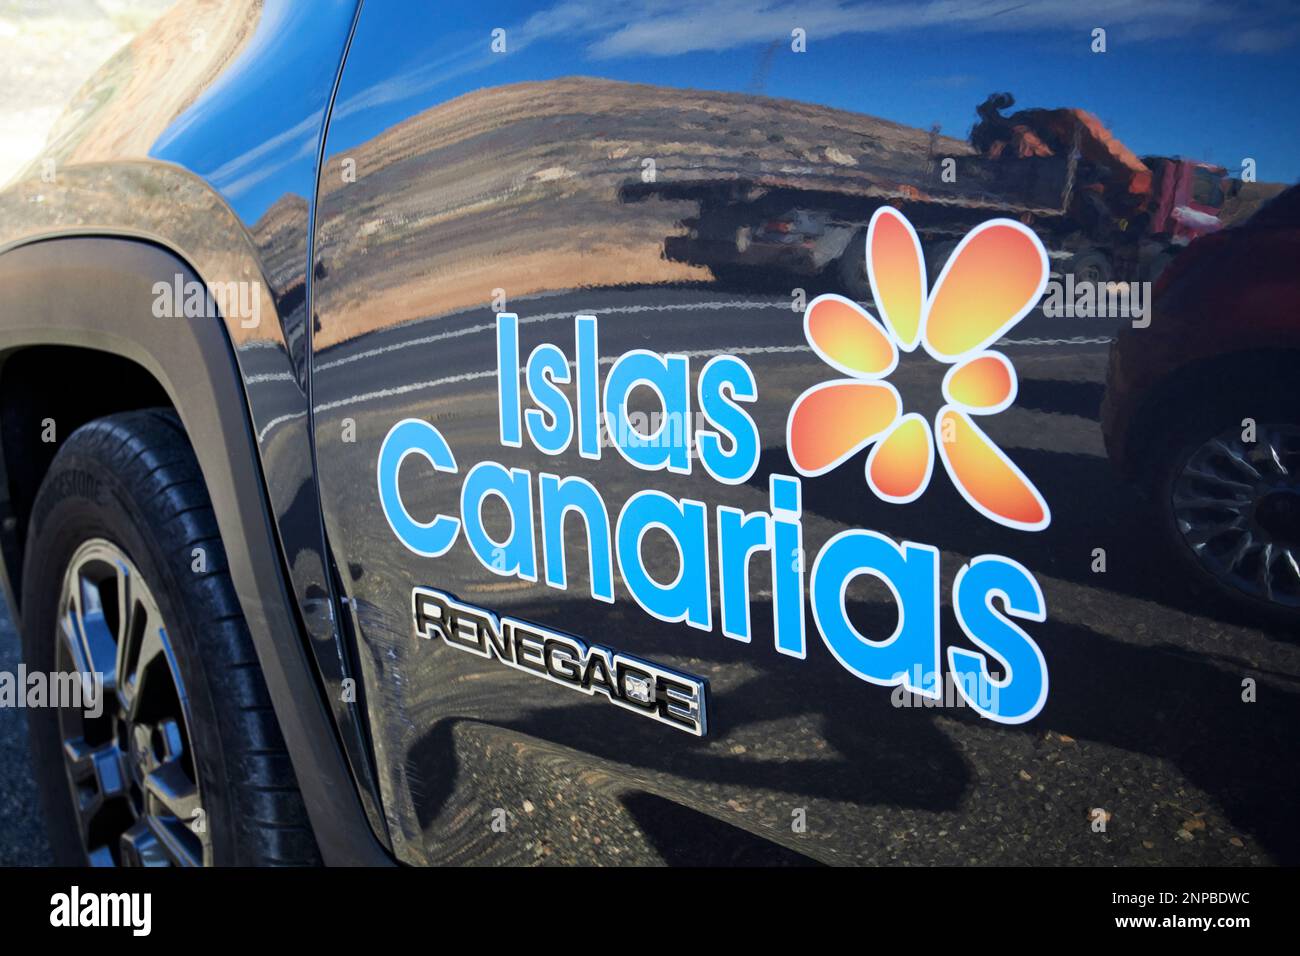 jeep renegade voiture de location avec le logo isla canarias de la société camera medina Lanzarote, îles Canaries, Espagne Banque D'Images